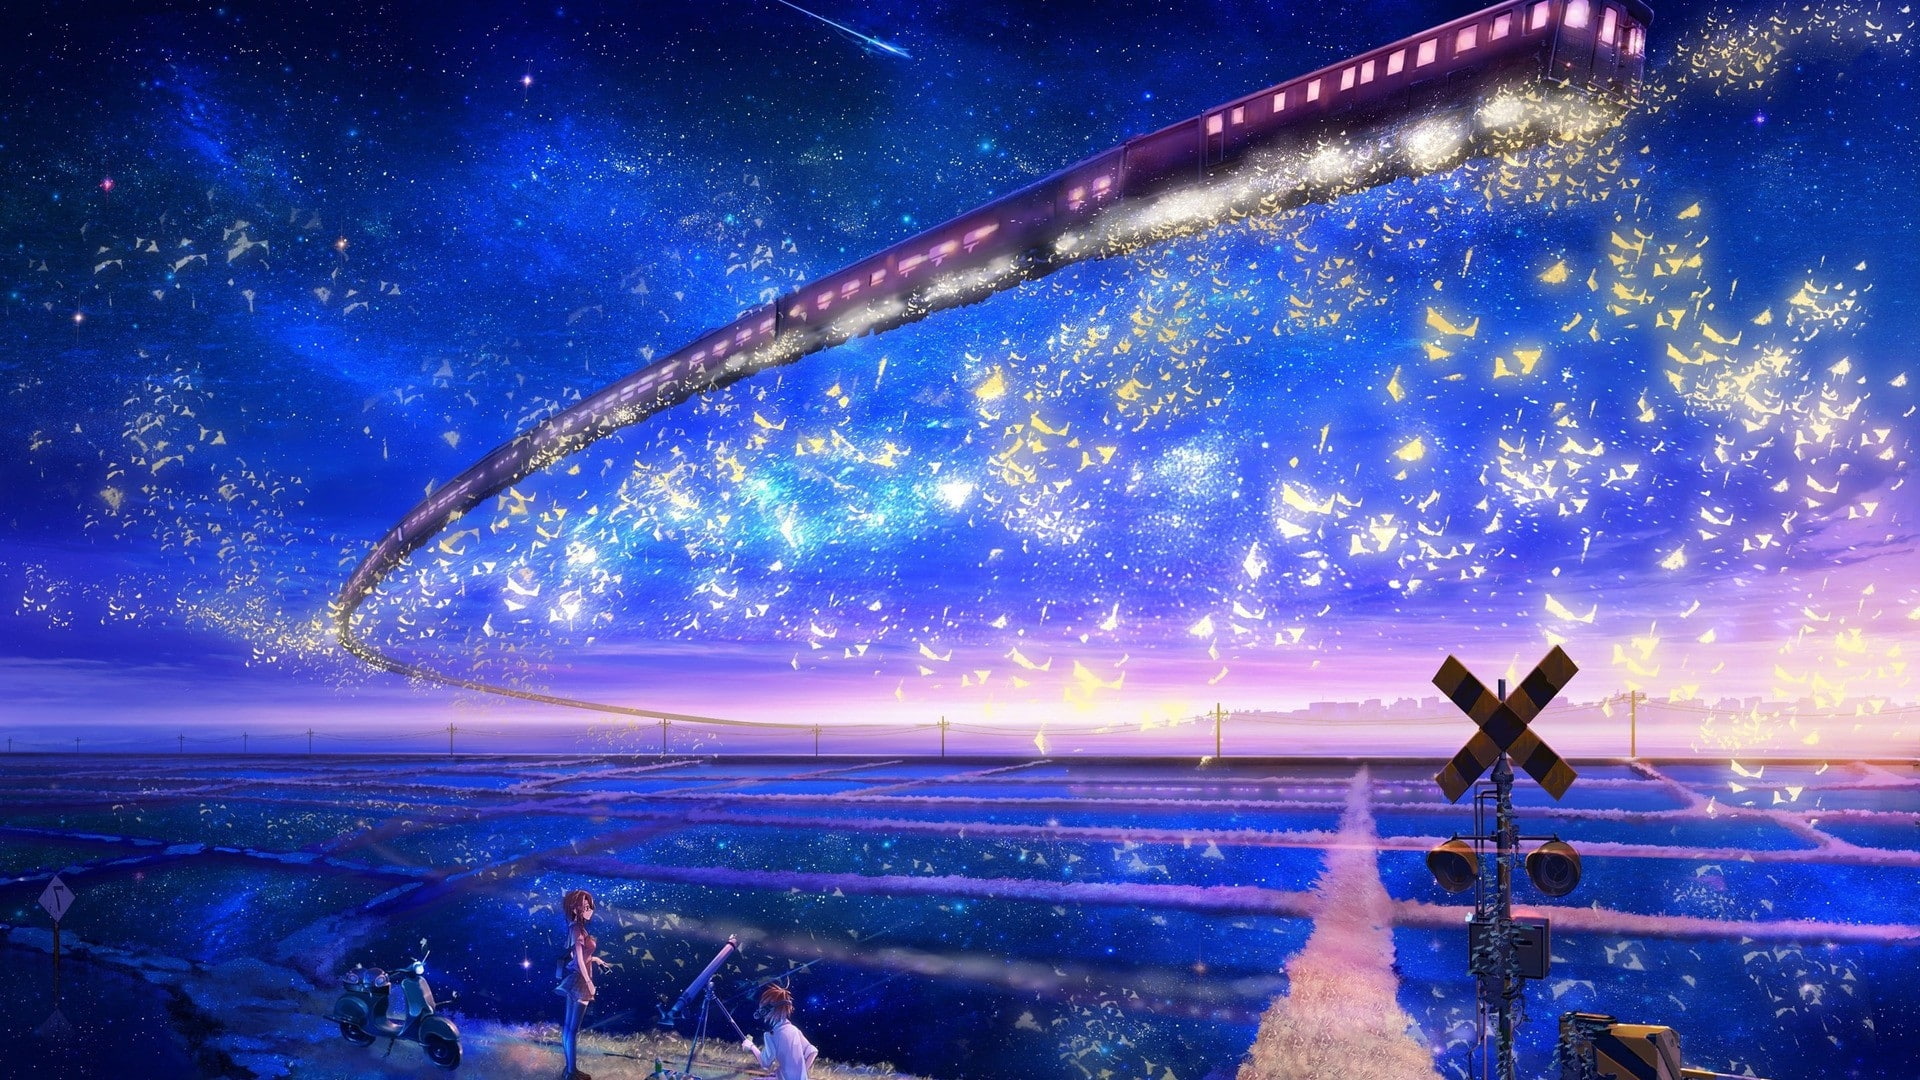 Free Download Hd Wallpaper Anime Landscape Scenic Fantasy Flying